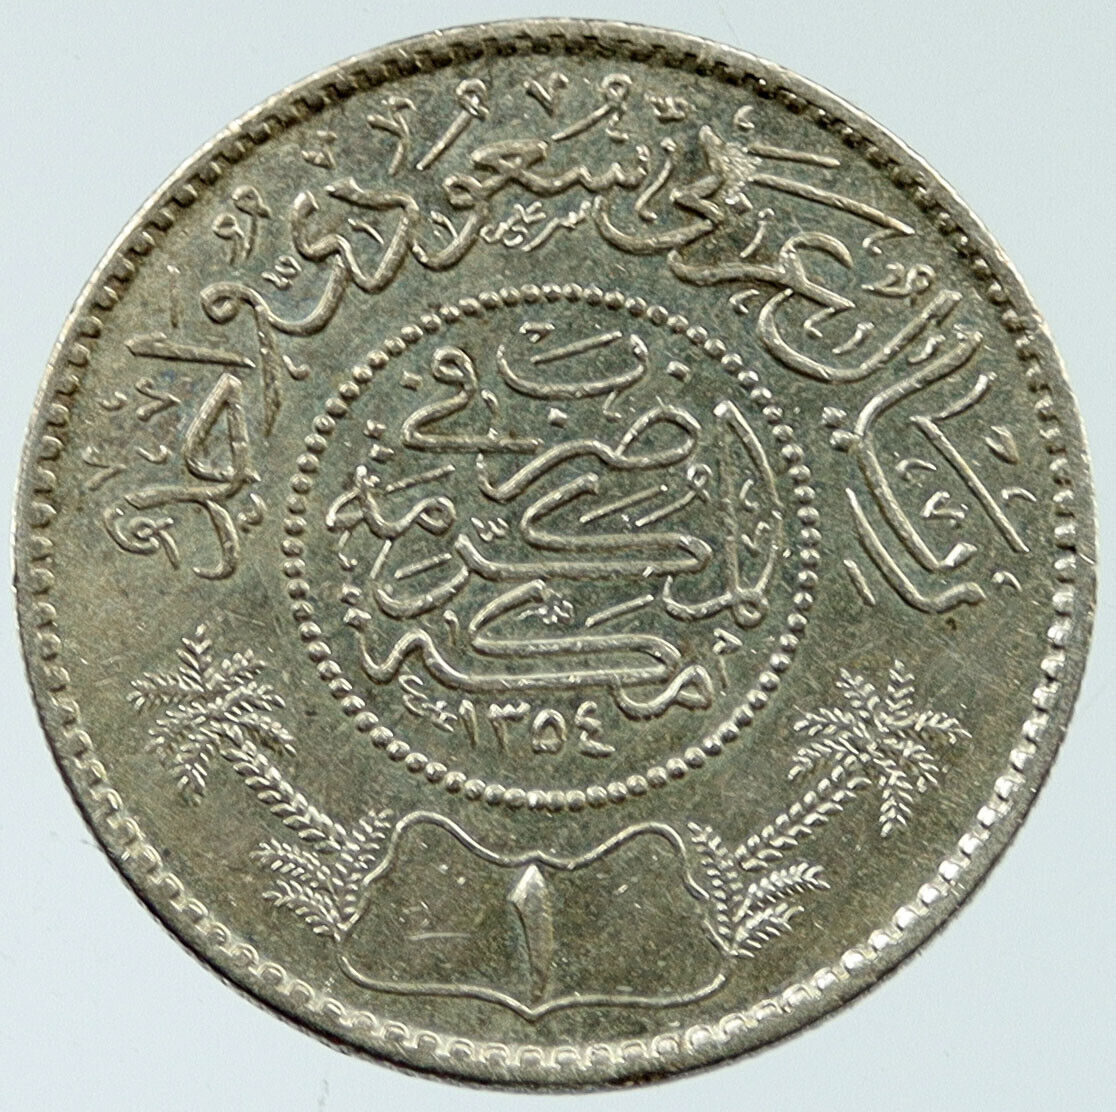 1936 1354AH SAUDI ARABIA King Large 0.34oz Silver 1 Riyal Arabic Coin i97713